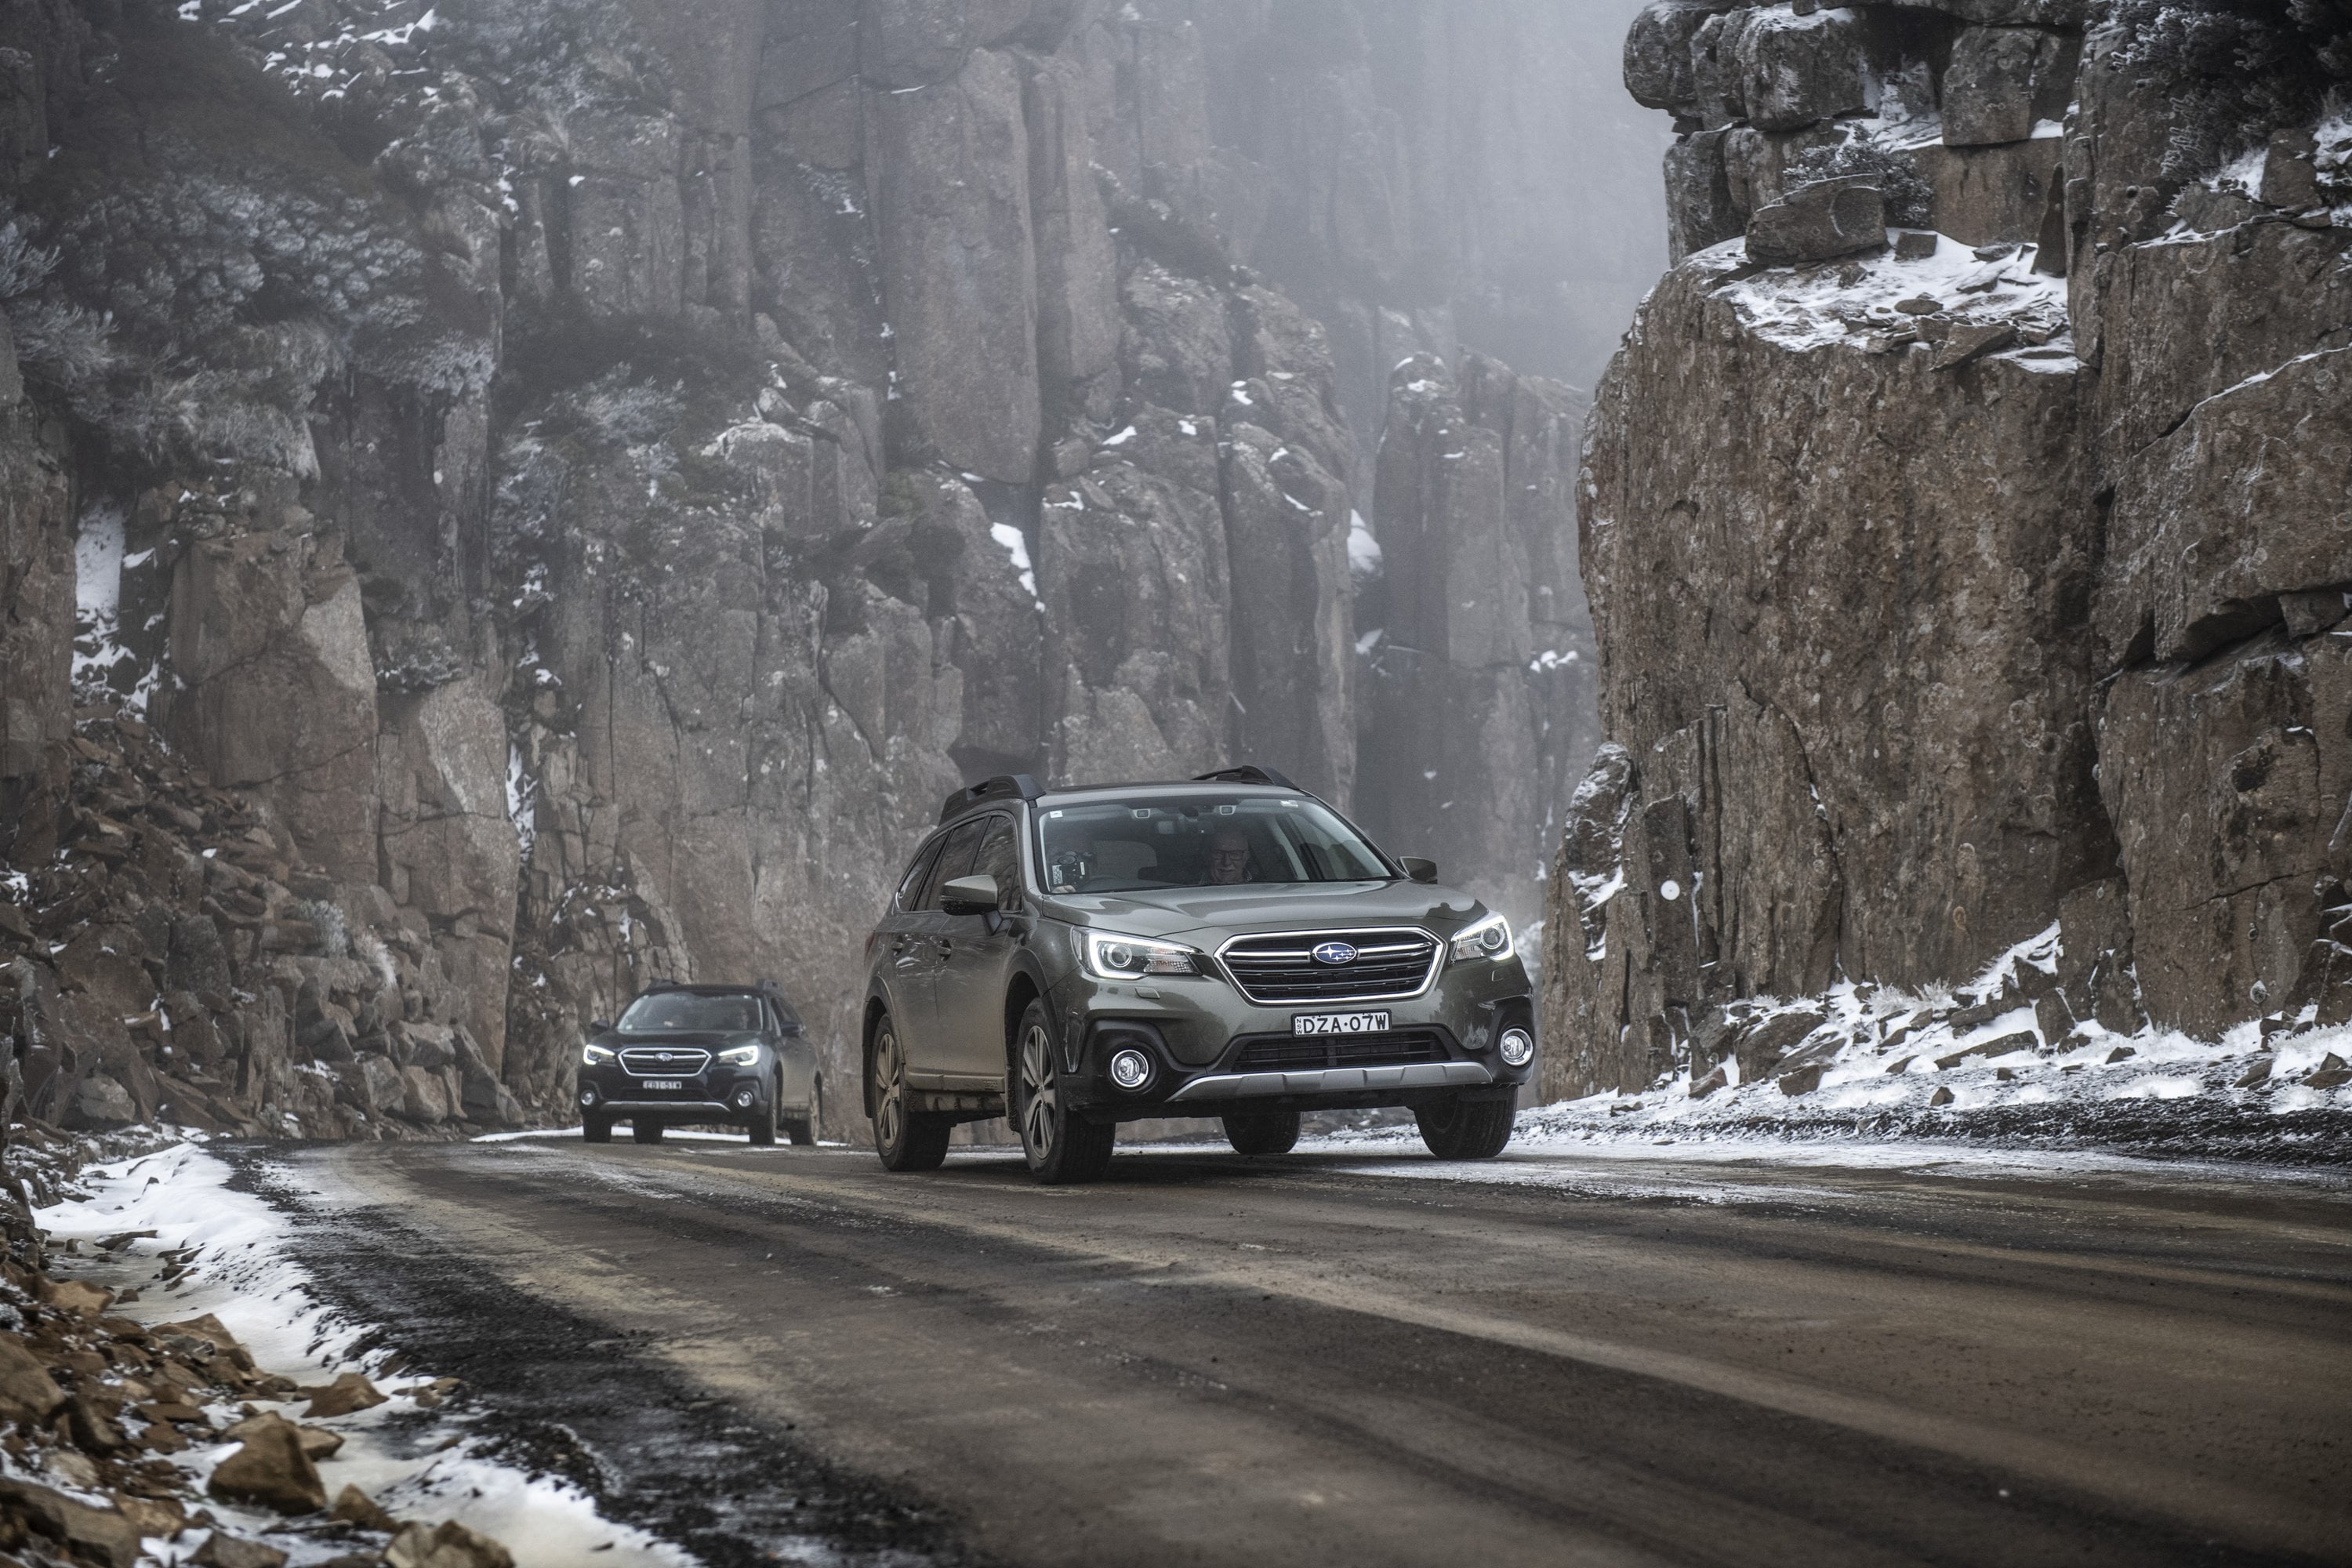 2019 Subaru Tasmania SUV Experience, June 19-21. Featuring Subaru Forester, Outback and  XV vehicles. (Photo Narrative Post/Matthias Engesser)